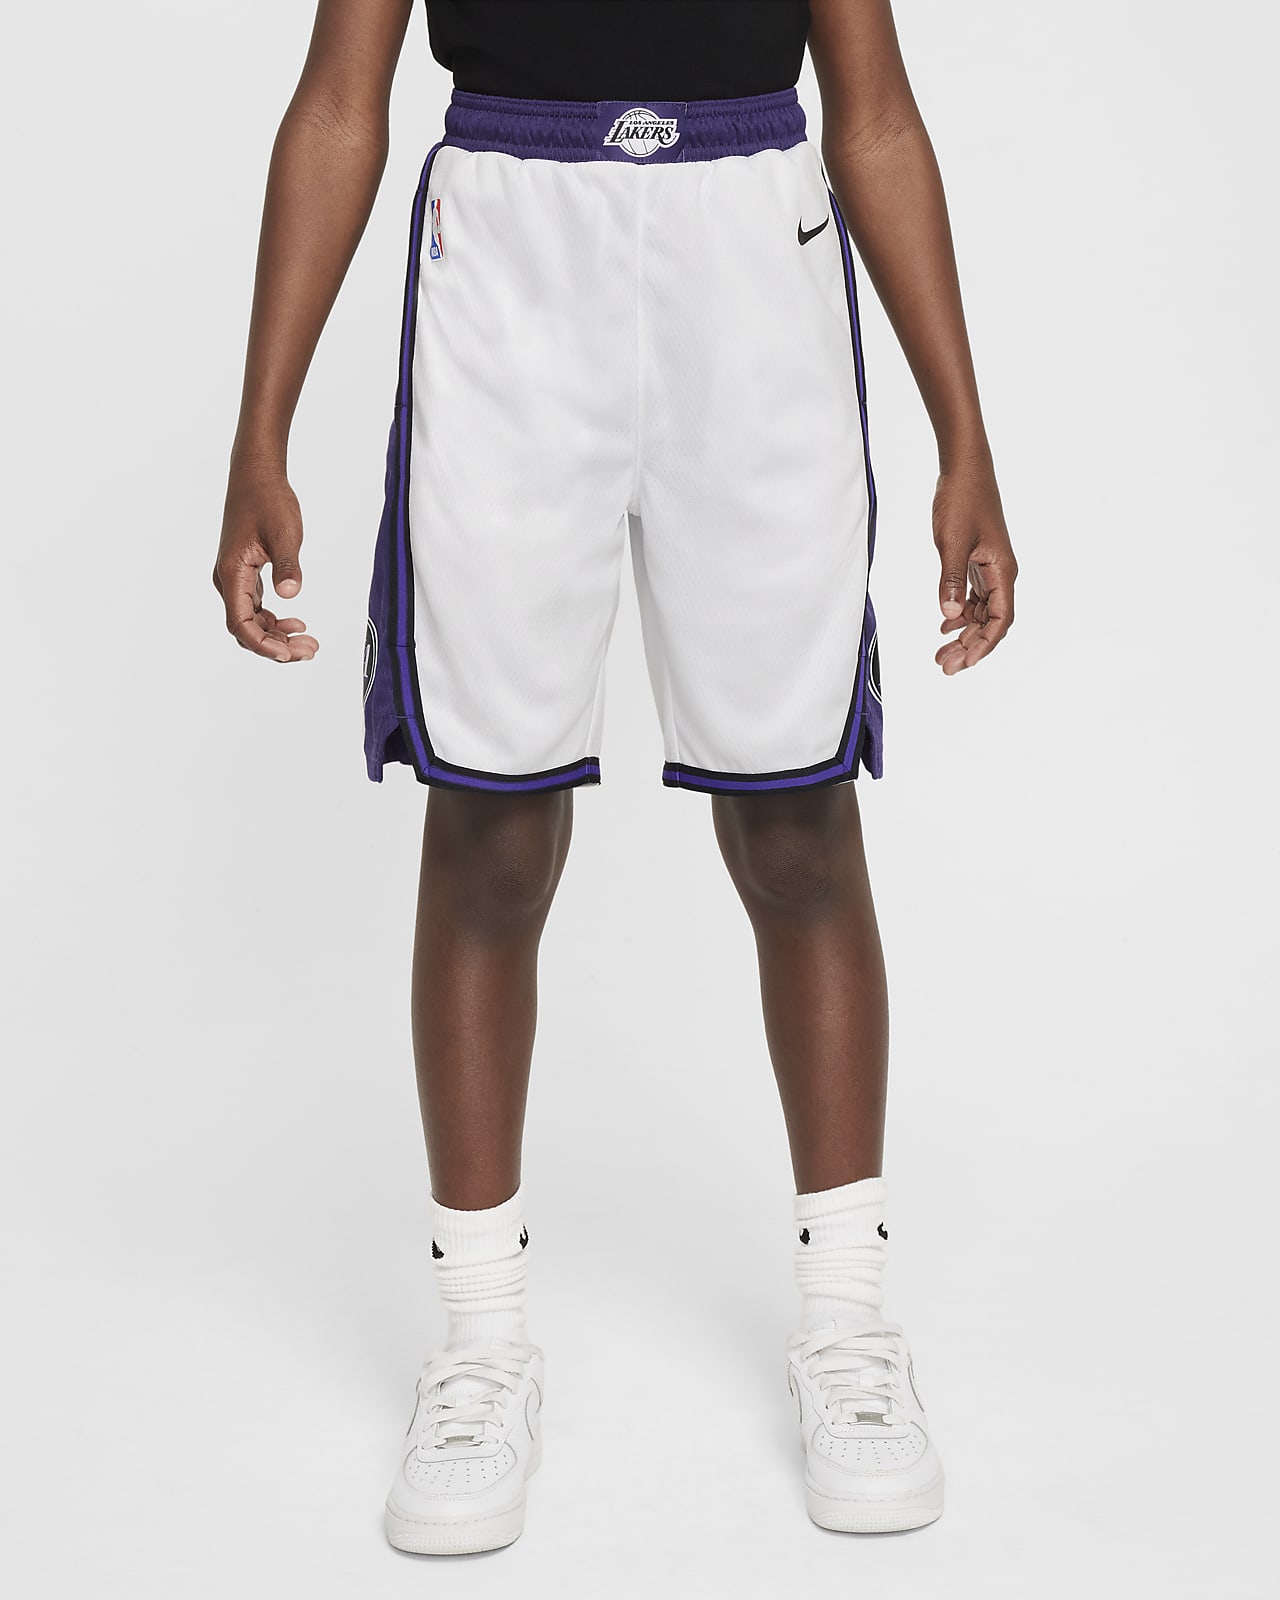 Los Angeles Lakers Pantalón corto Nike Dri-FIT NBA Swingman - Niño/a